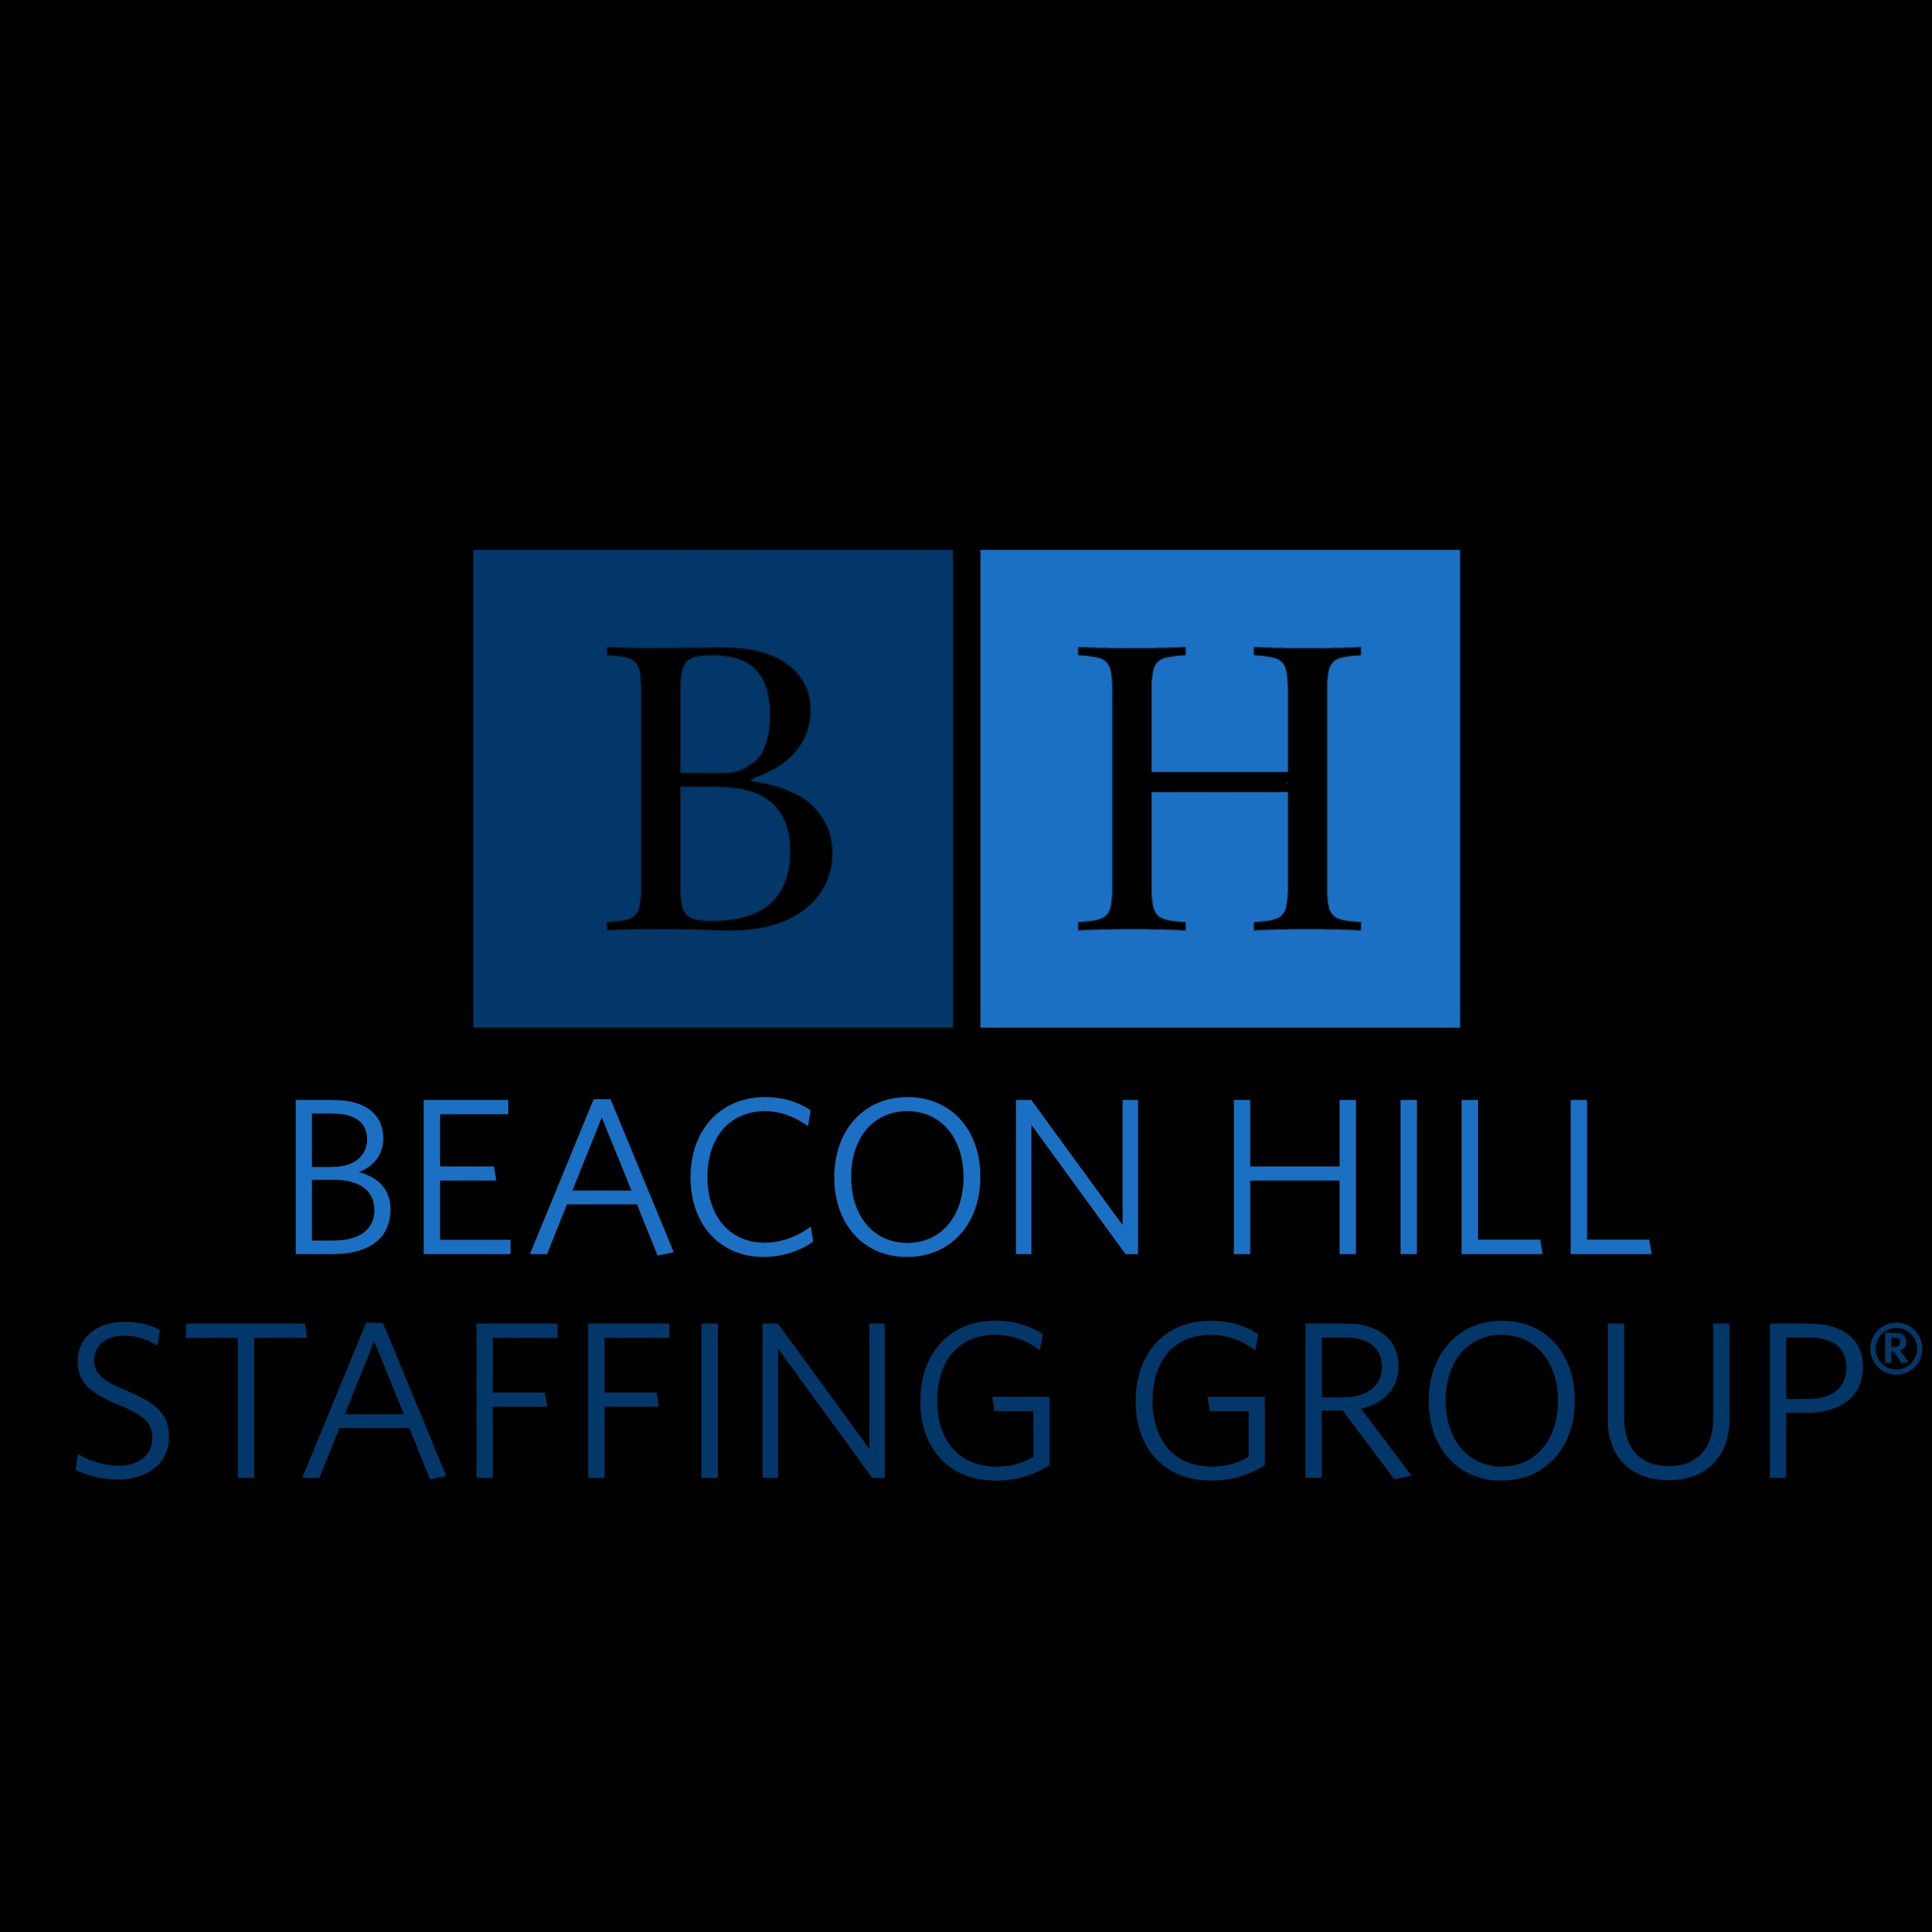 Beacon Hill Staffing Group Atlanta (770)663-0099